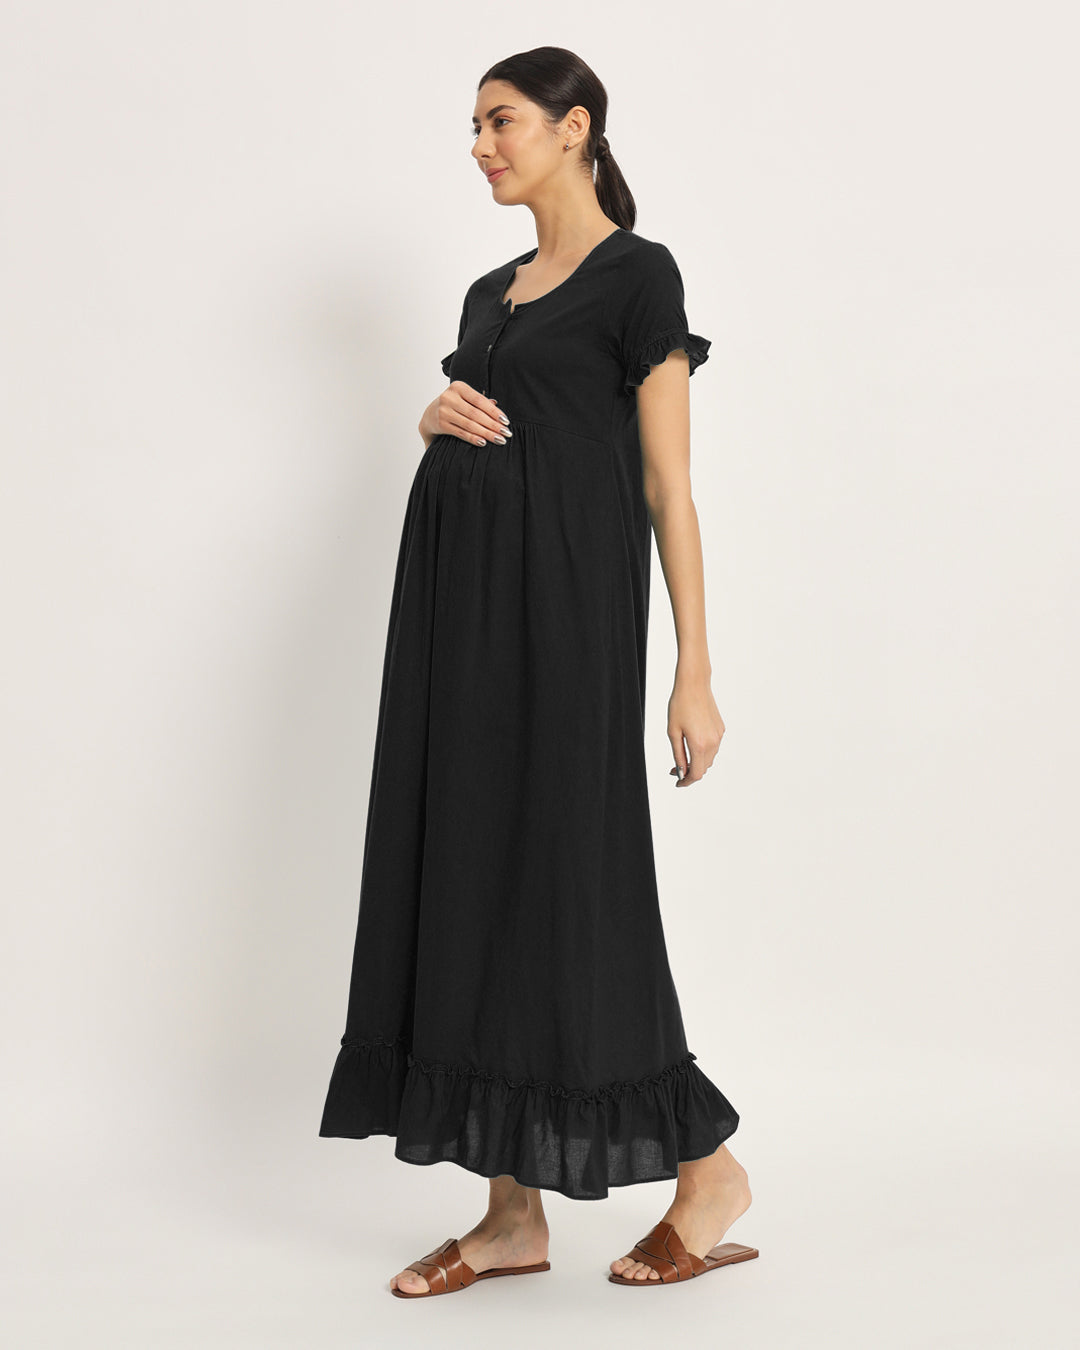 Classic Black Bumpin' & Stylin' Maternity & Nursing Dress